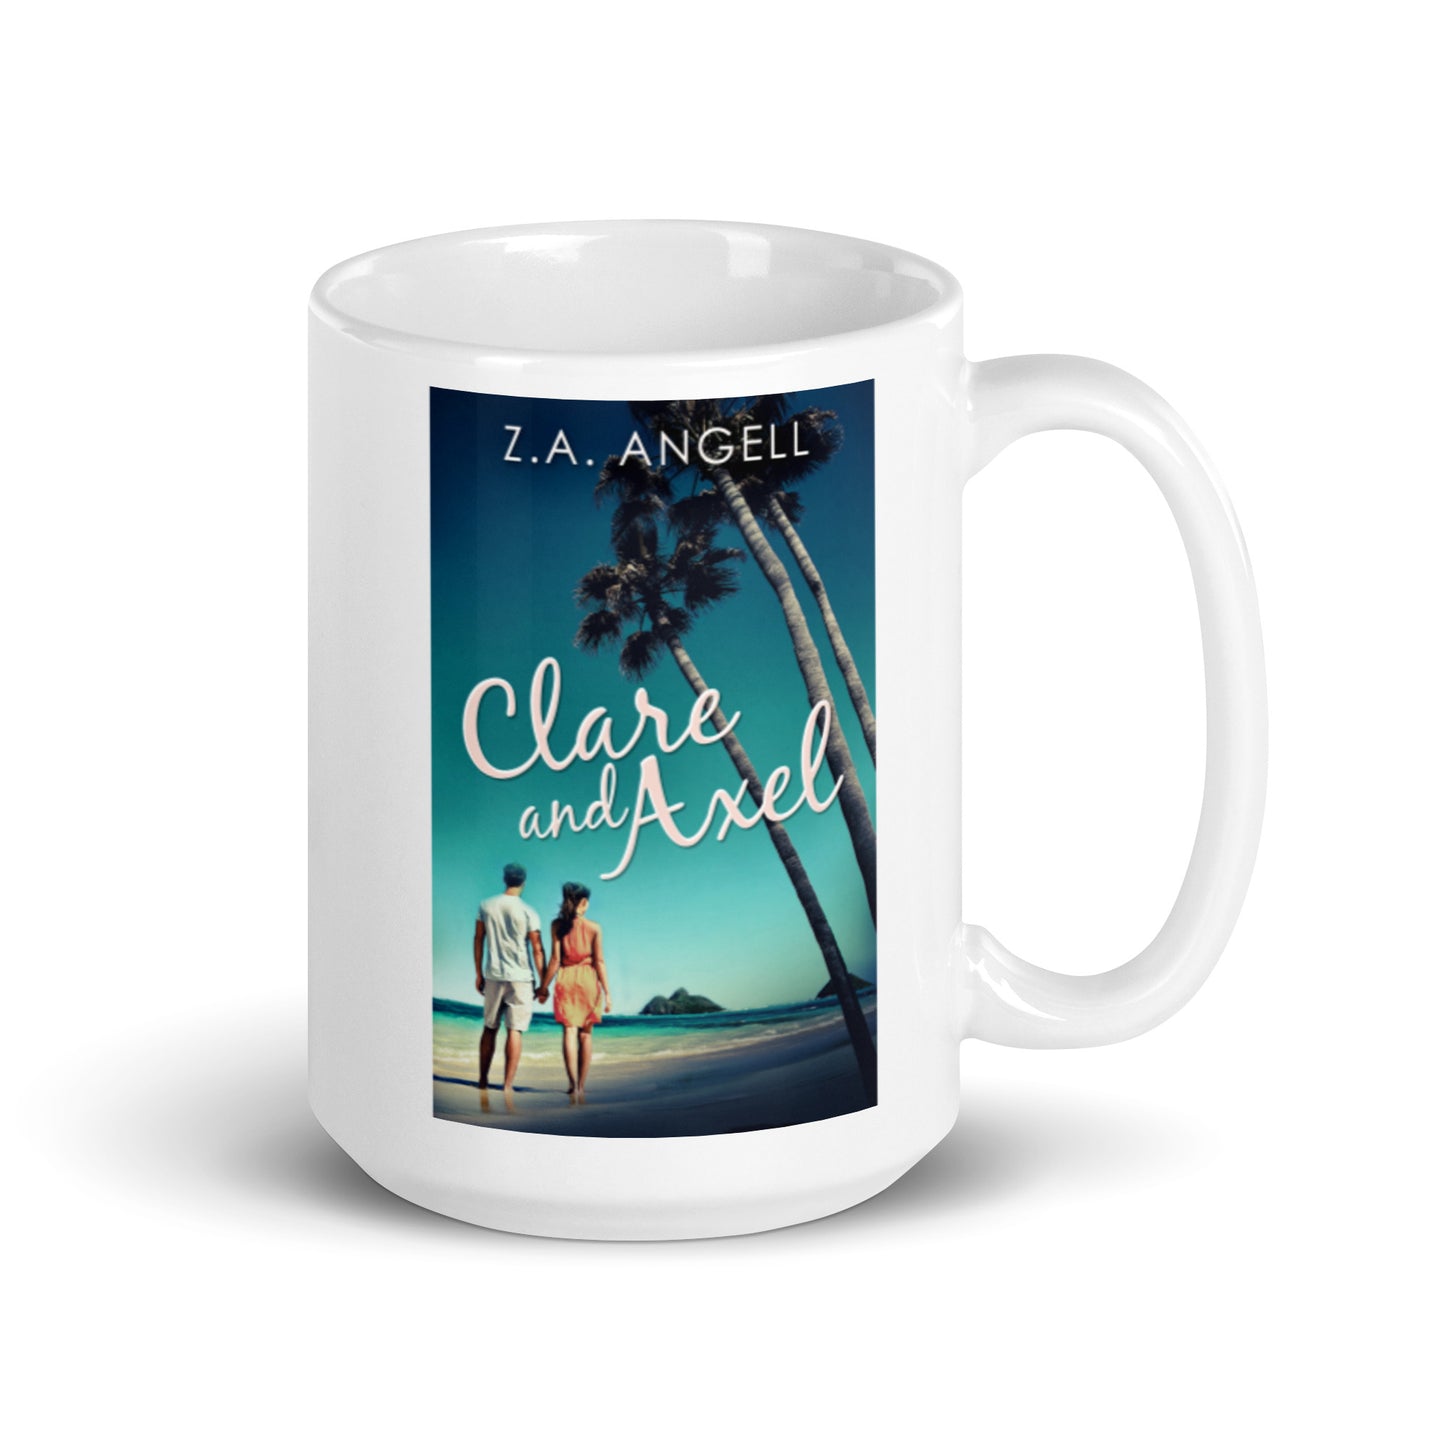 Clare and Axel - White Coffee Mug